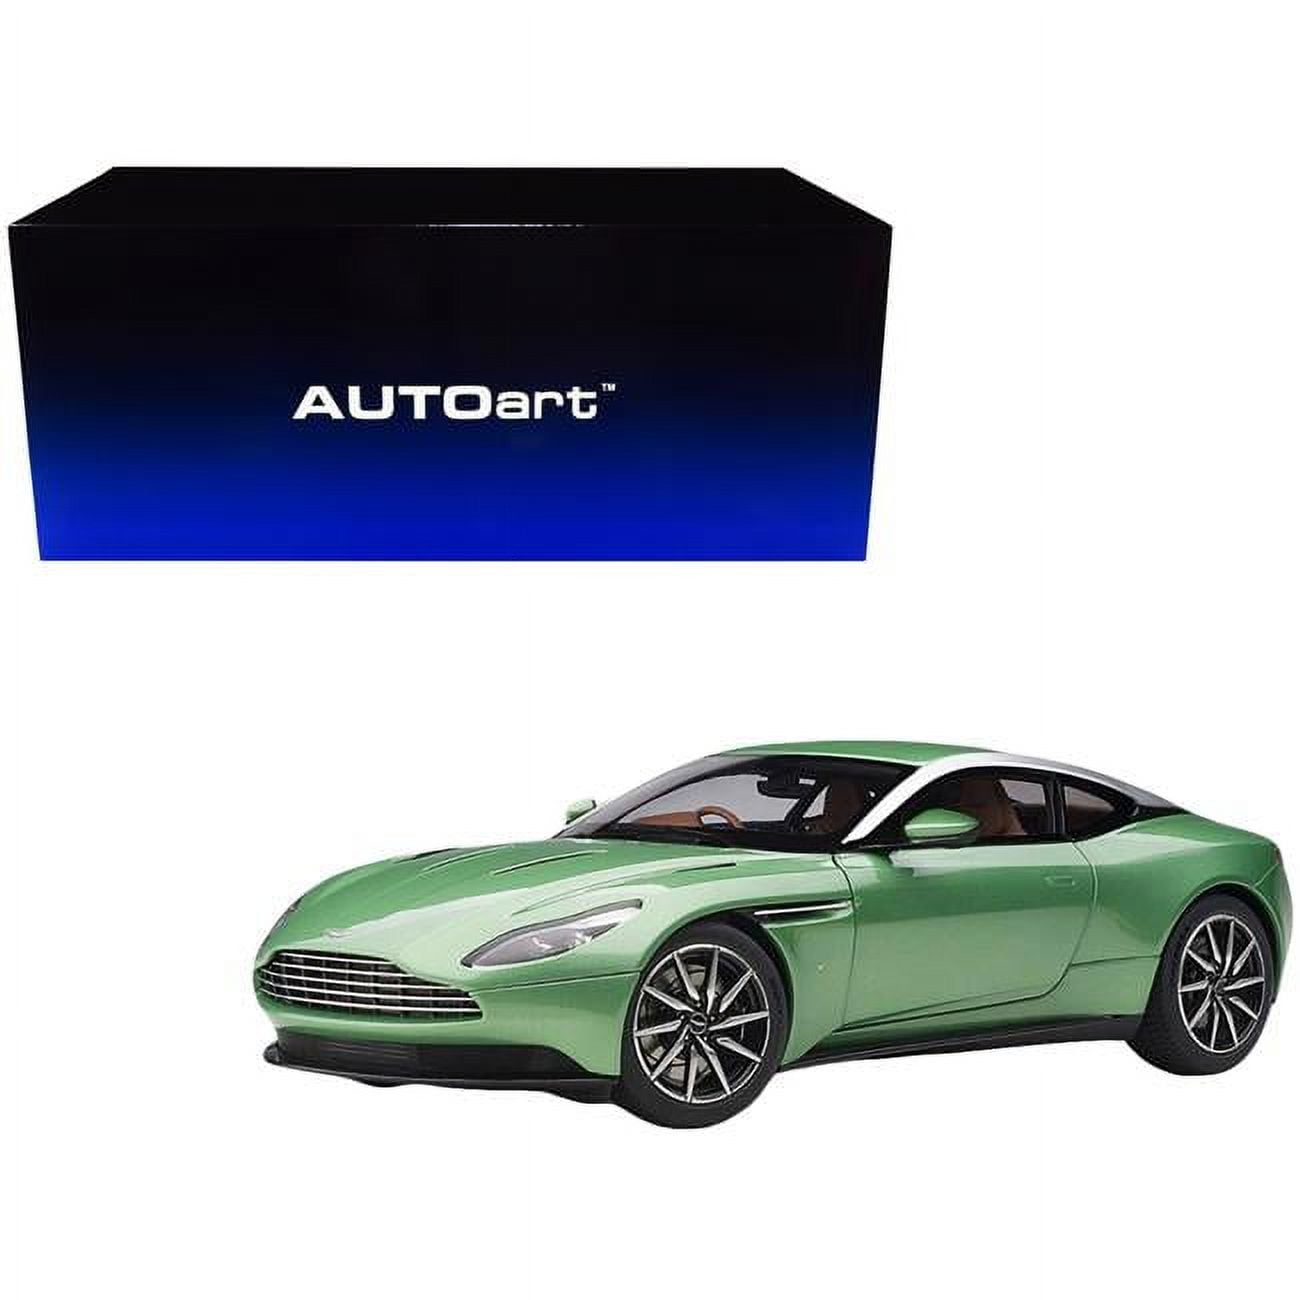 Picture of Autoart 70269 Aston Martin DB11 RHD Right Hand Drive Apple Tree 1 by 18 Scale Model Car, Green Metallic